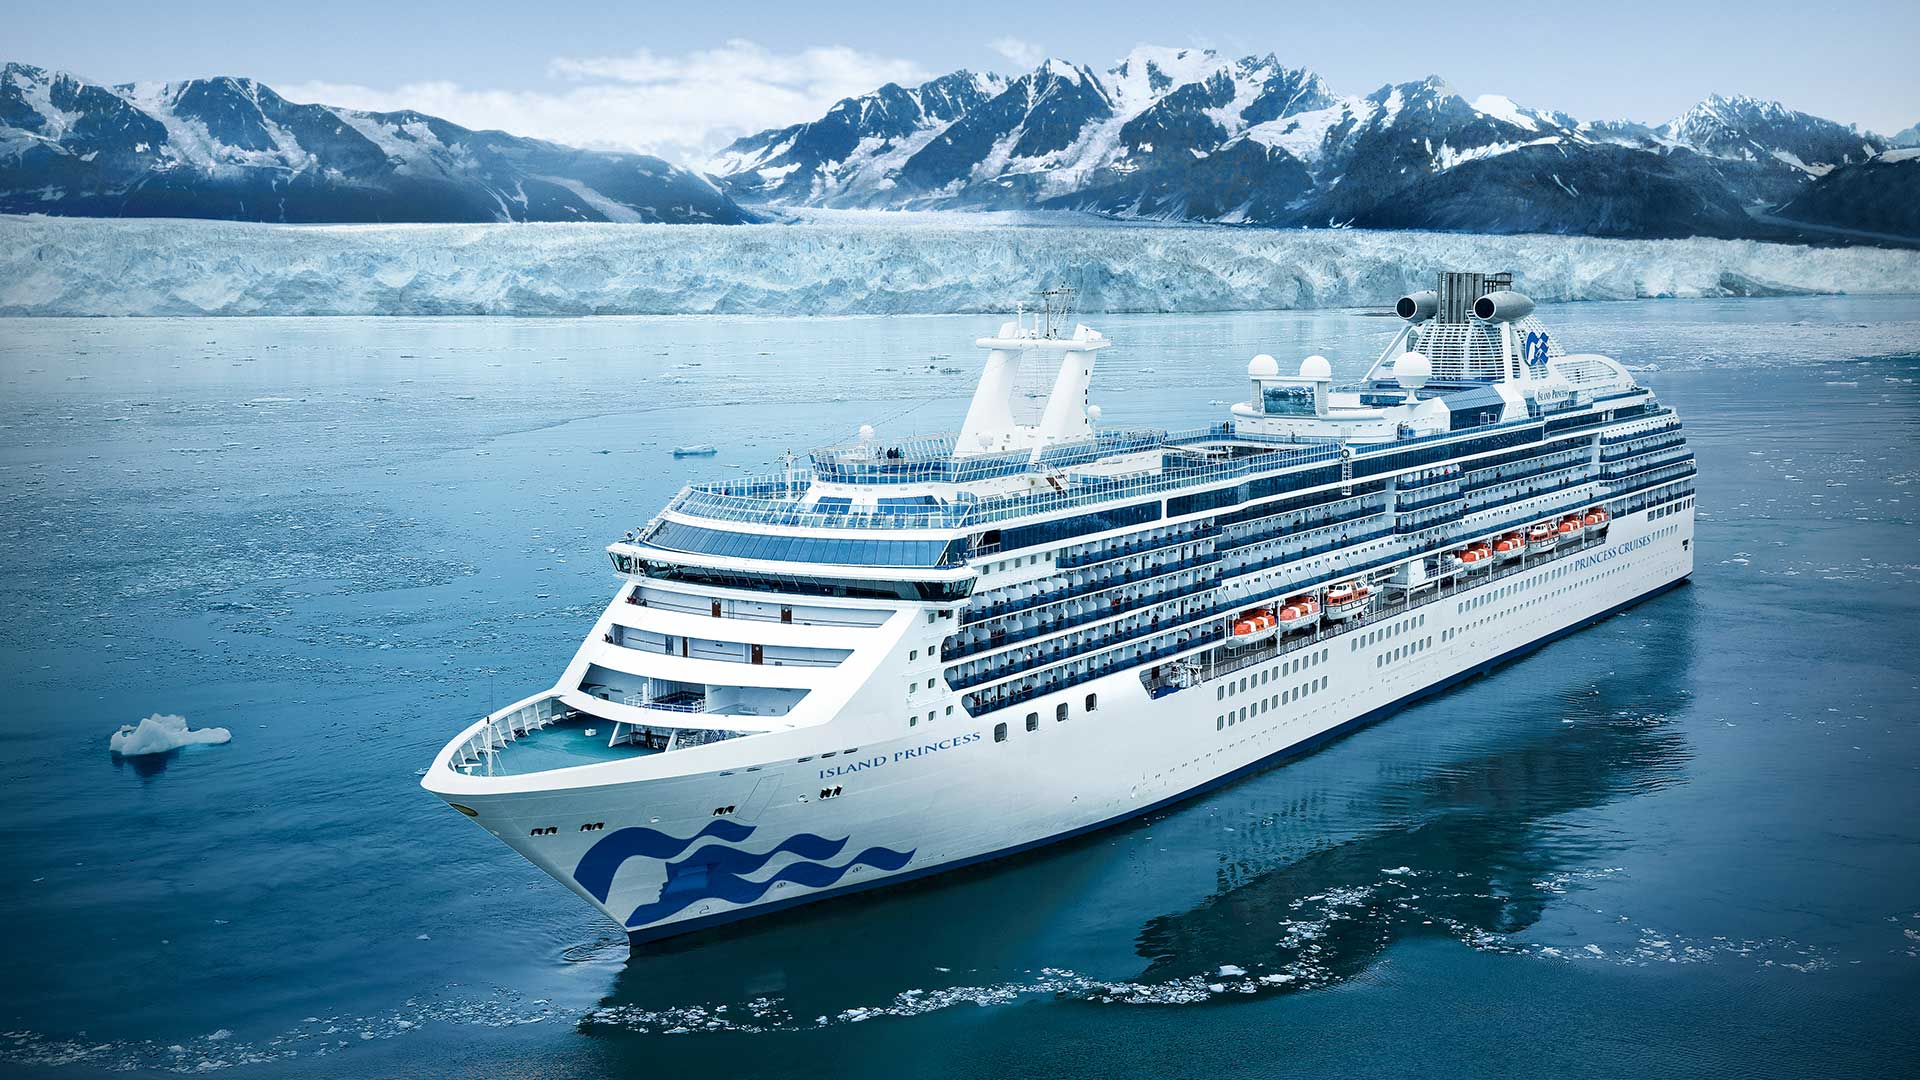 alaska cruise season 2024